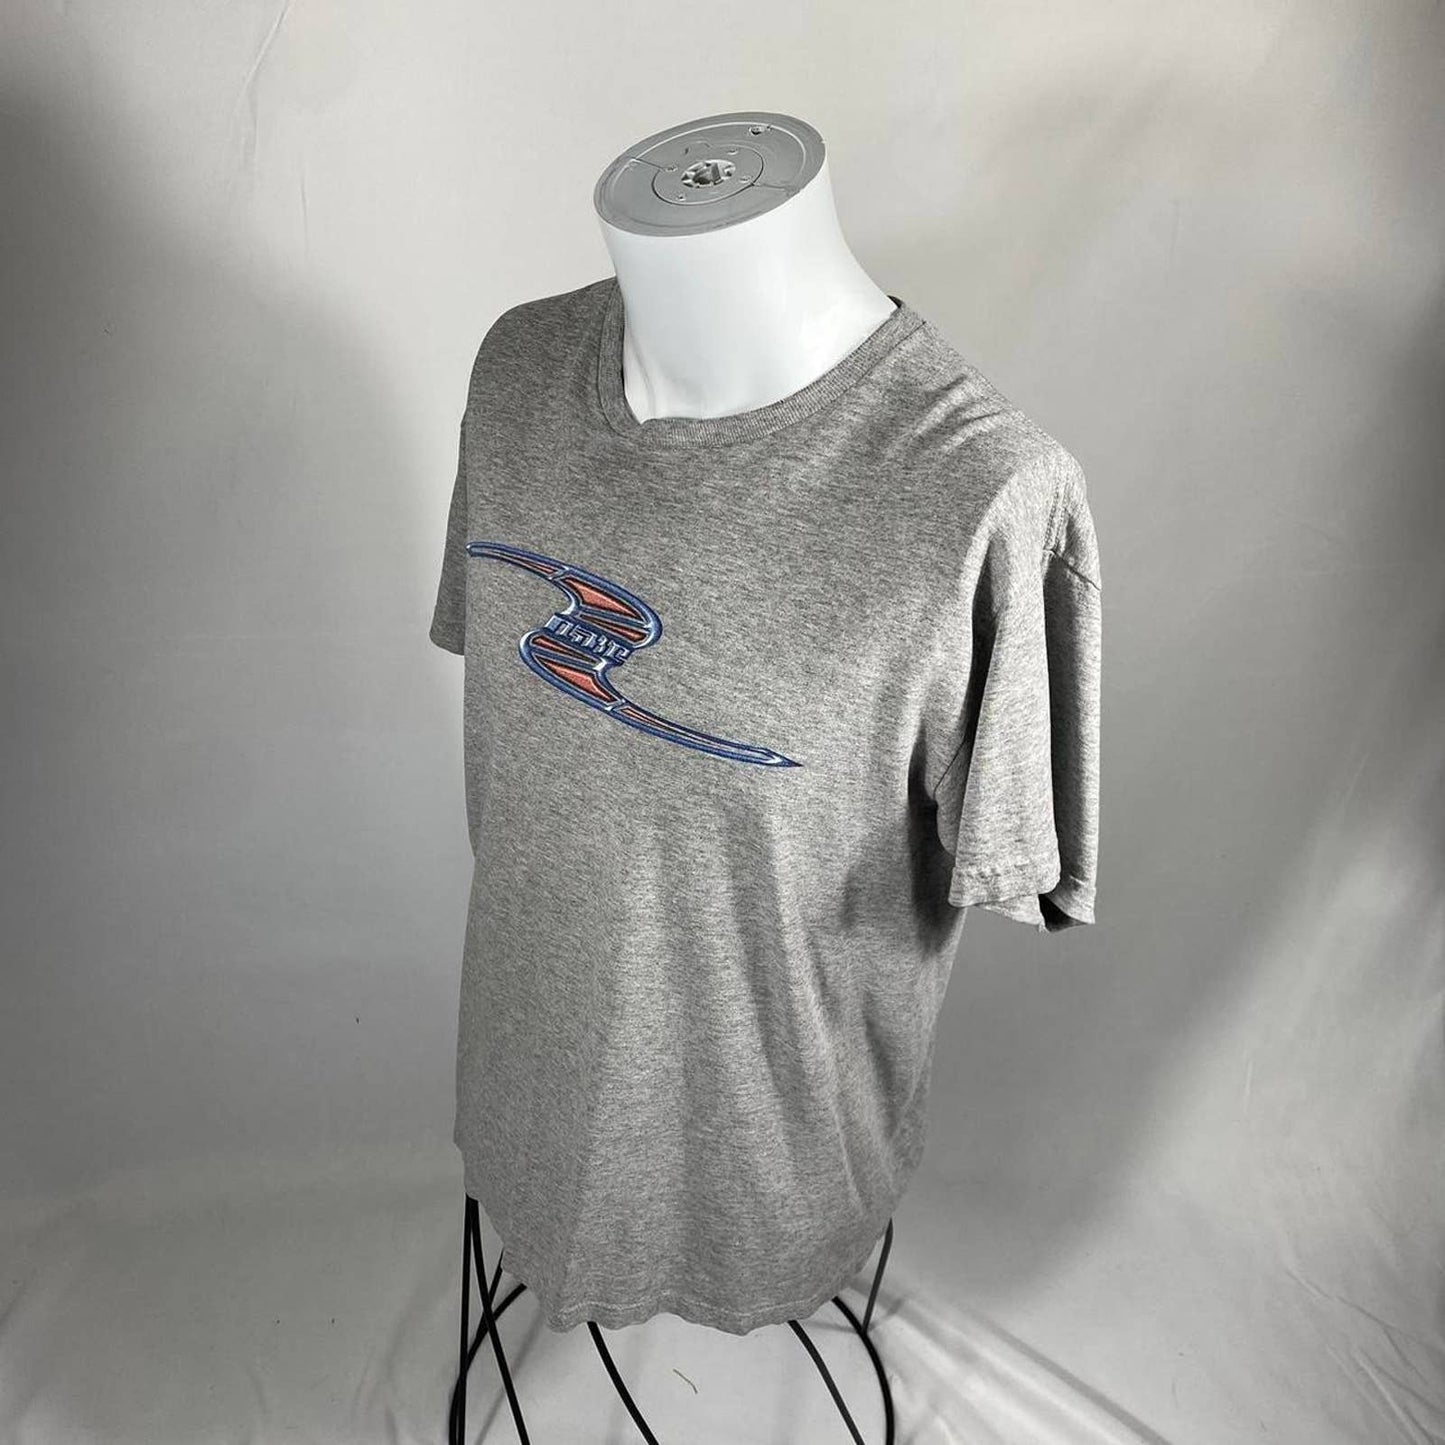 (S) Vintage 90's Nike T-shirt